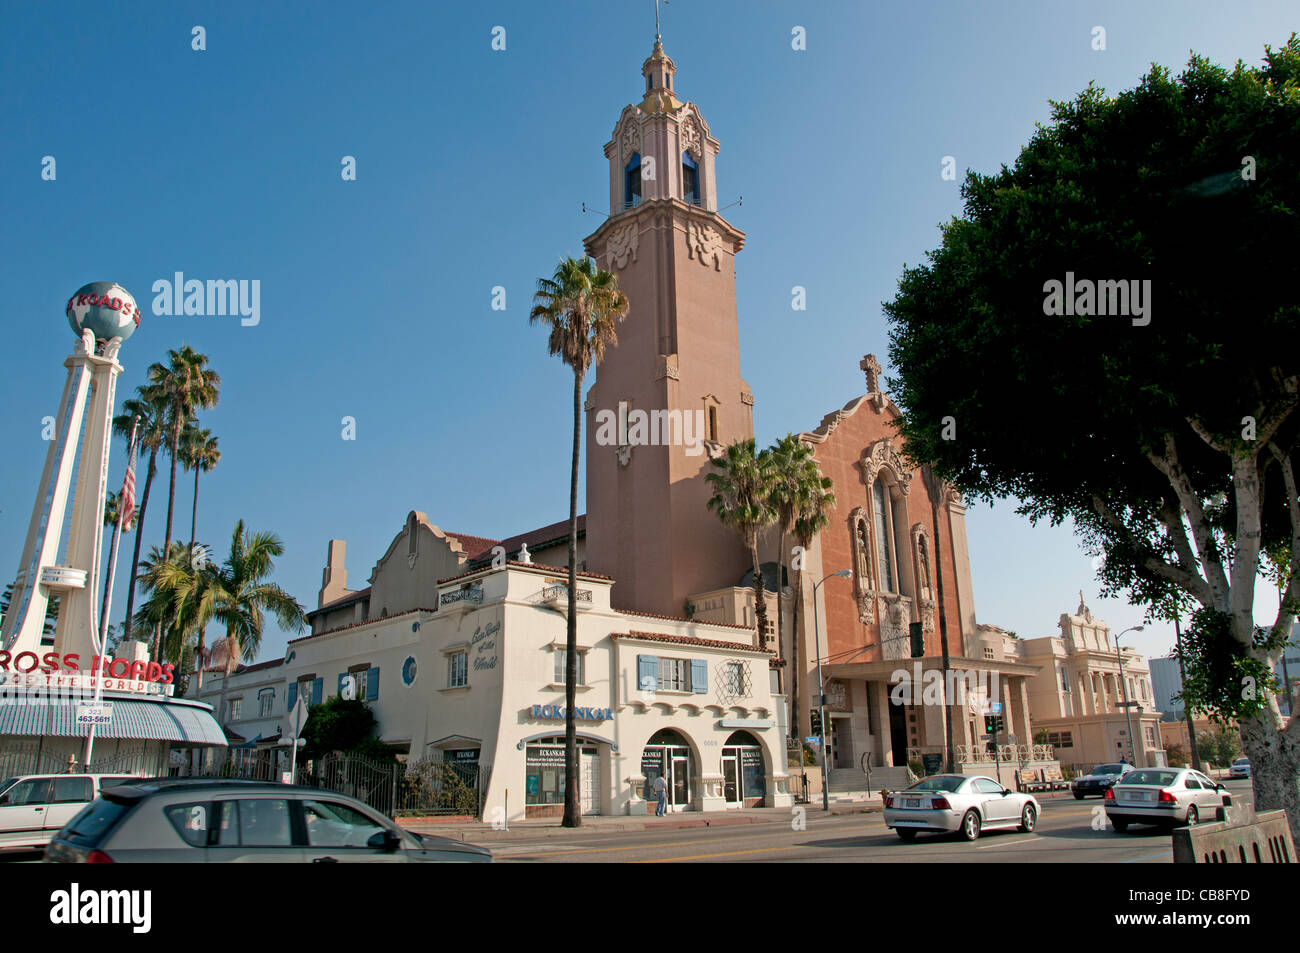 Sunset Boulevard Beverly Hills Los Angeles USA Stockfoto